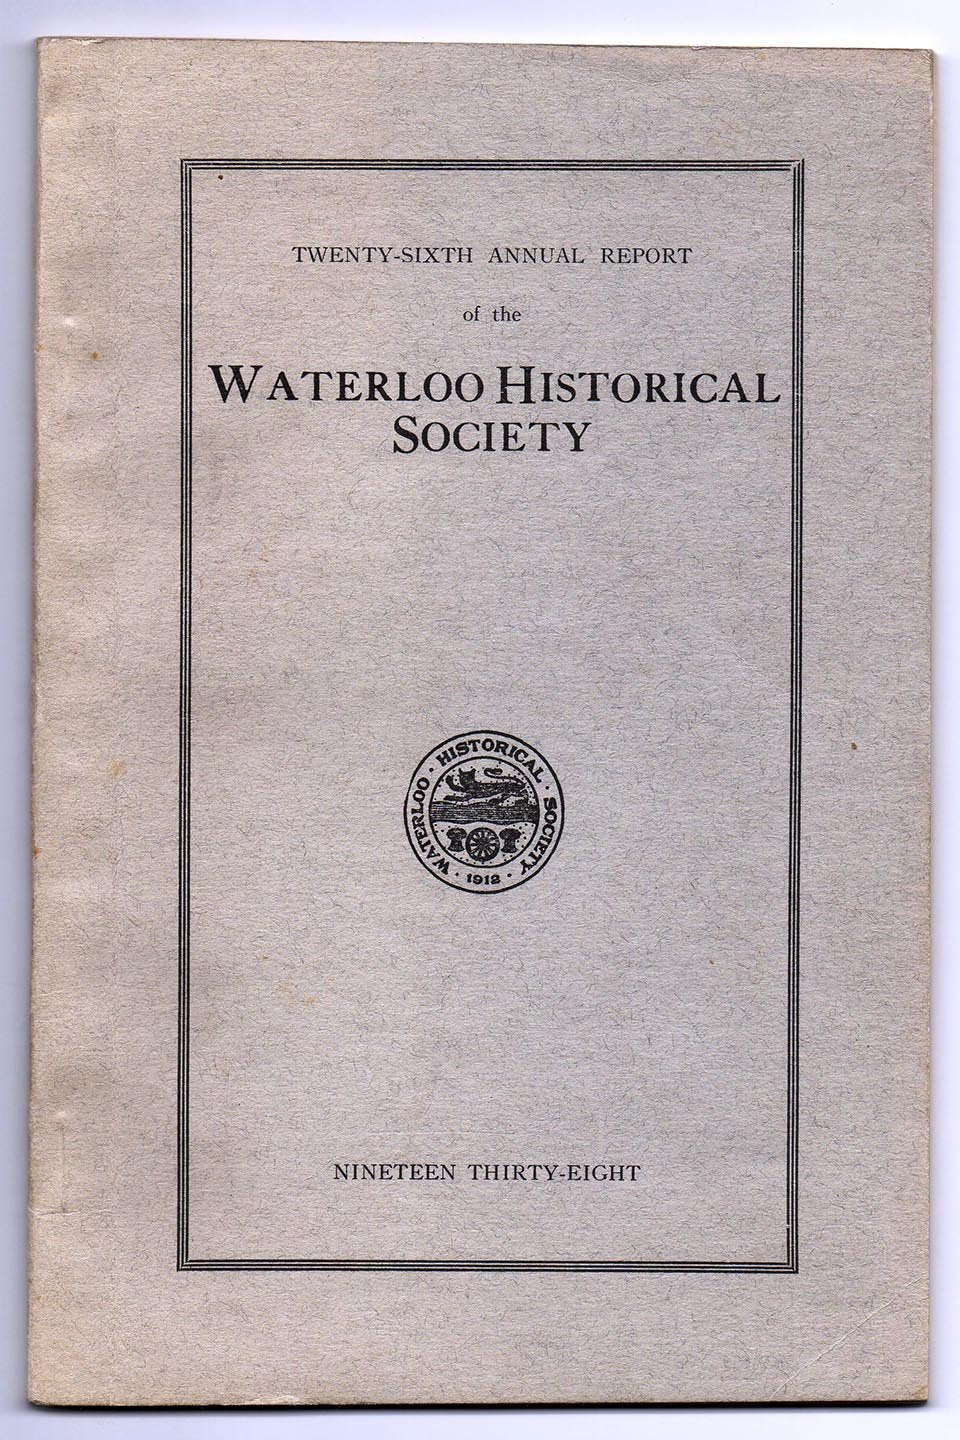 Twenty-sixth Annual Report of the Waterloo Historical Society, 1938